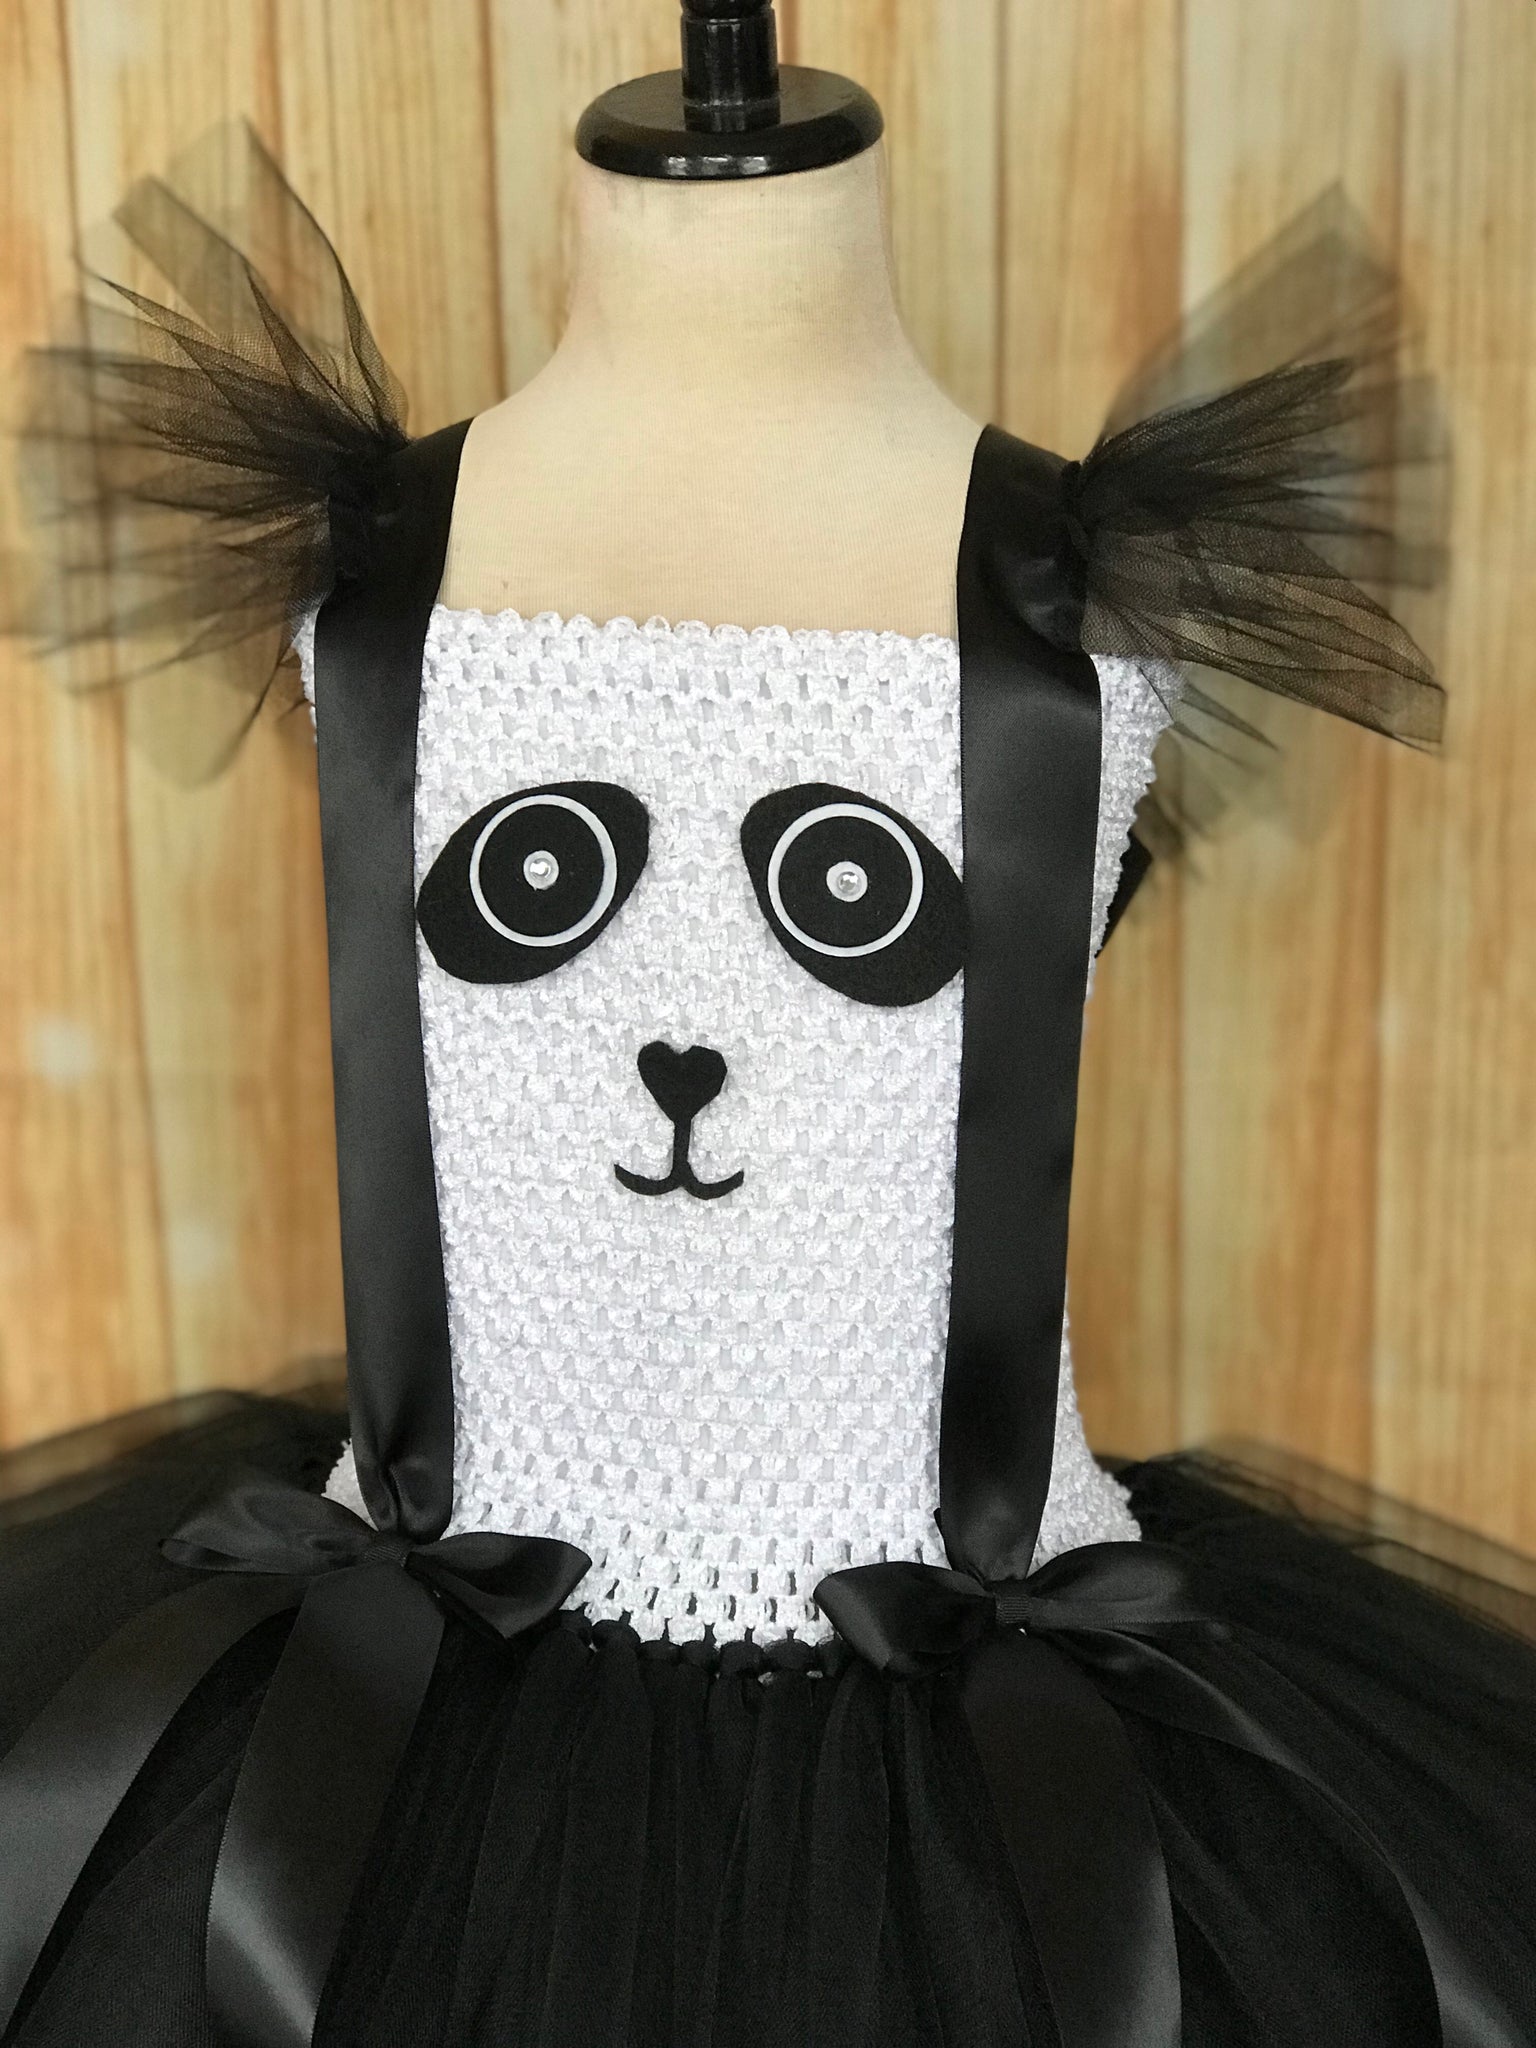 panda costume